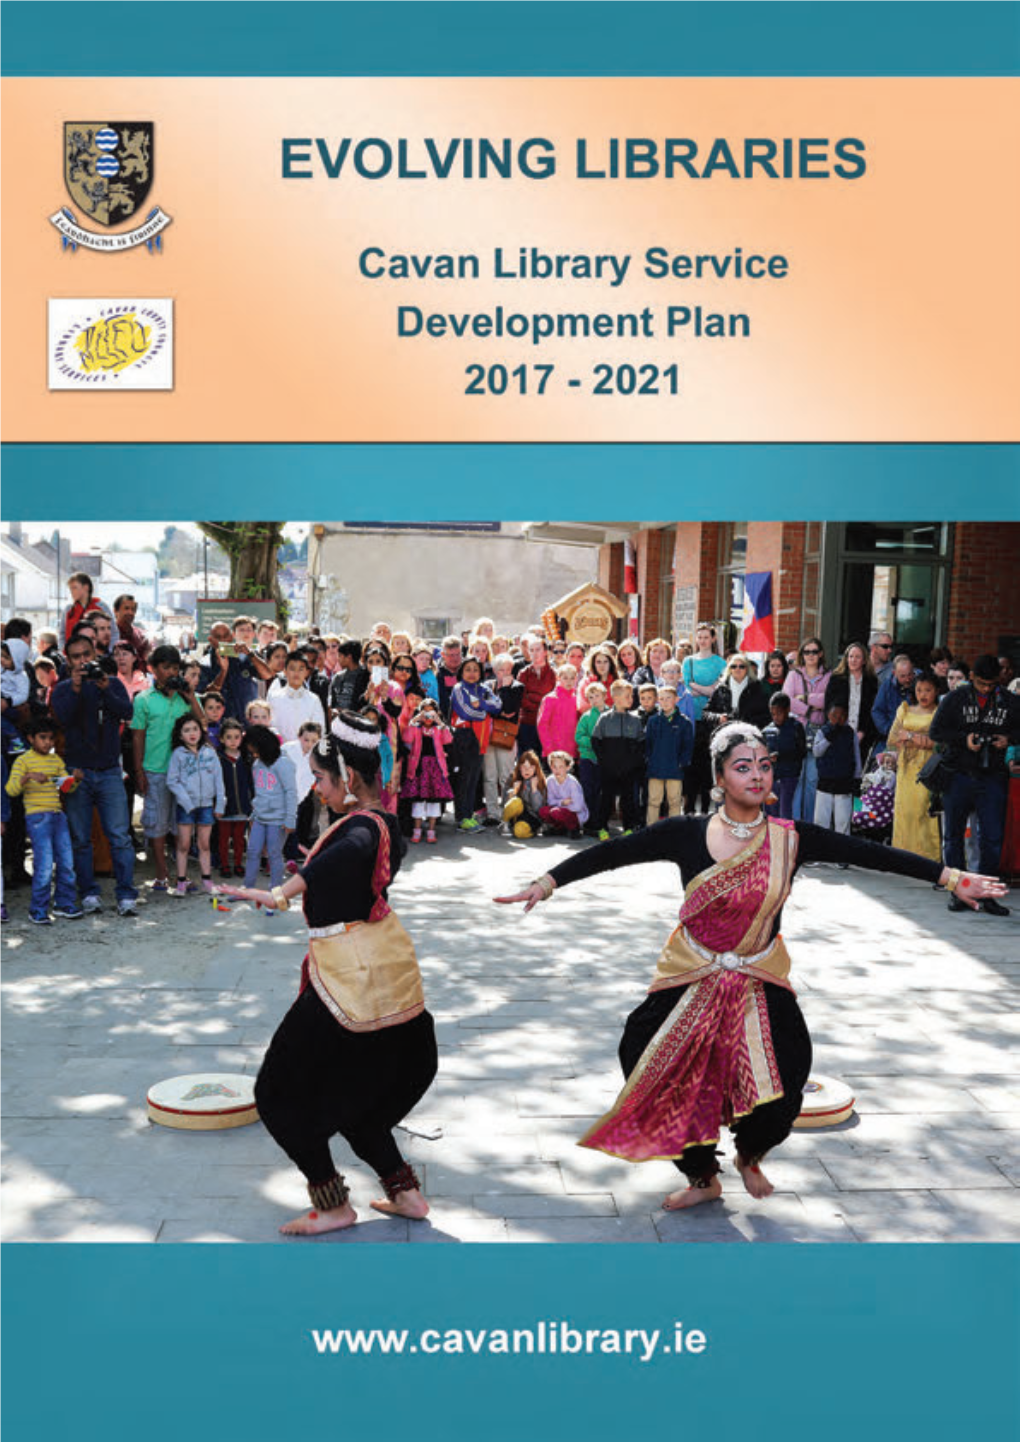 Cavan Library Service Development Plan 2017-2021